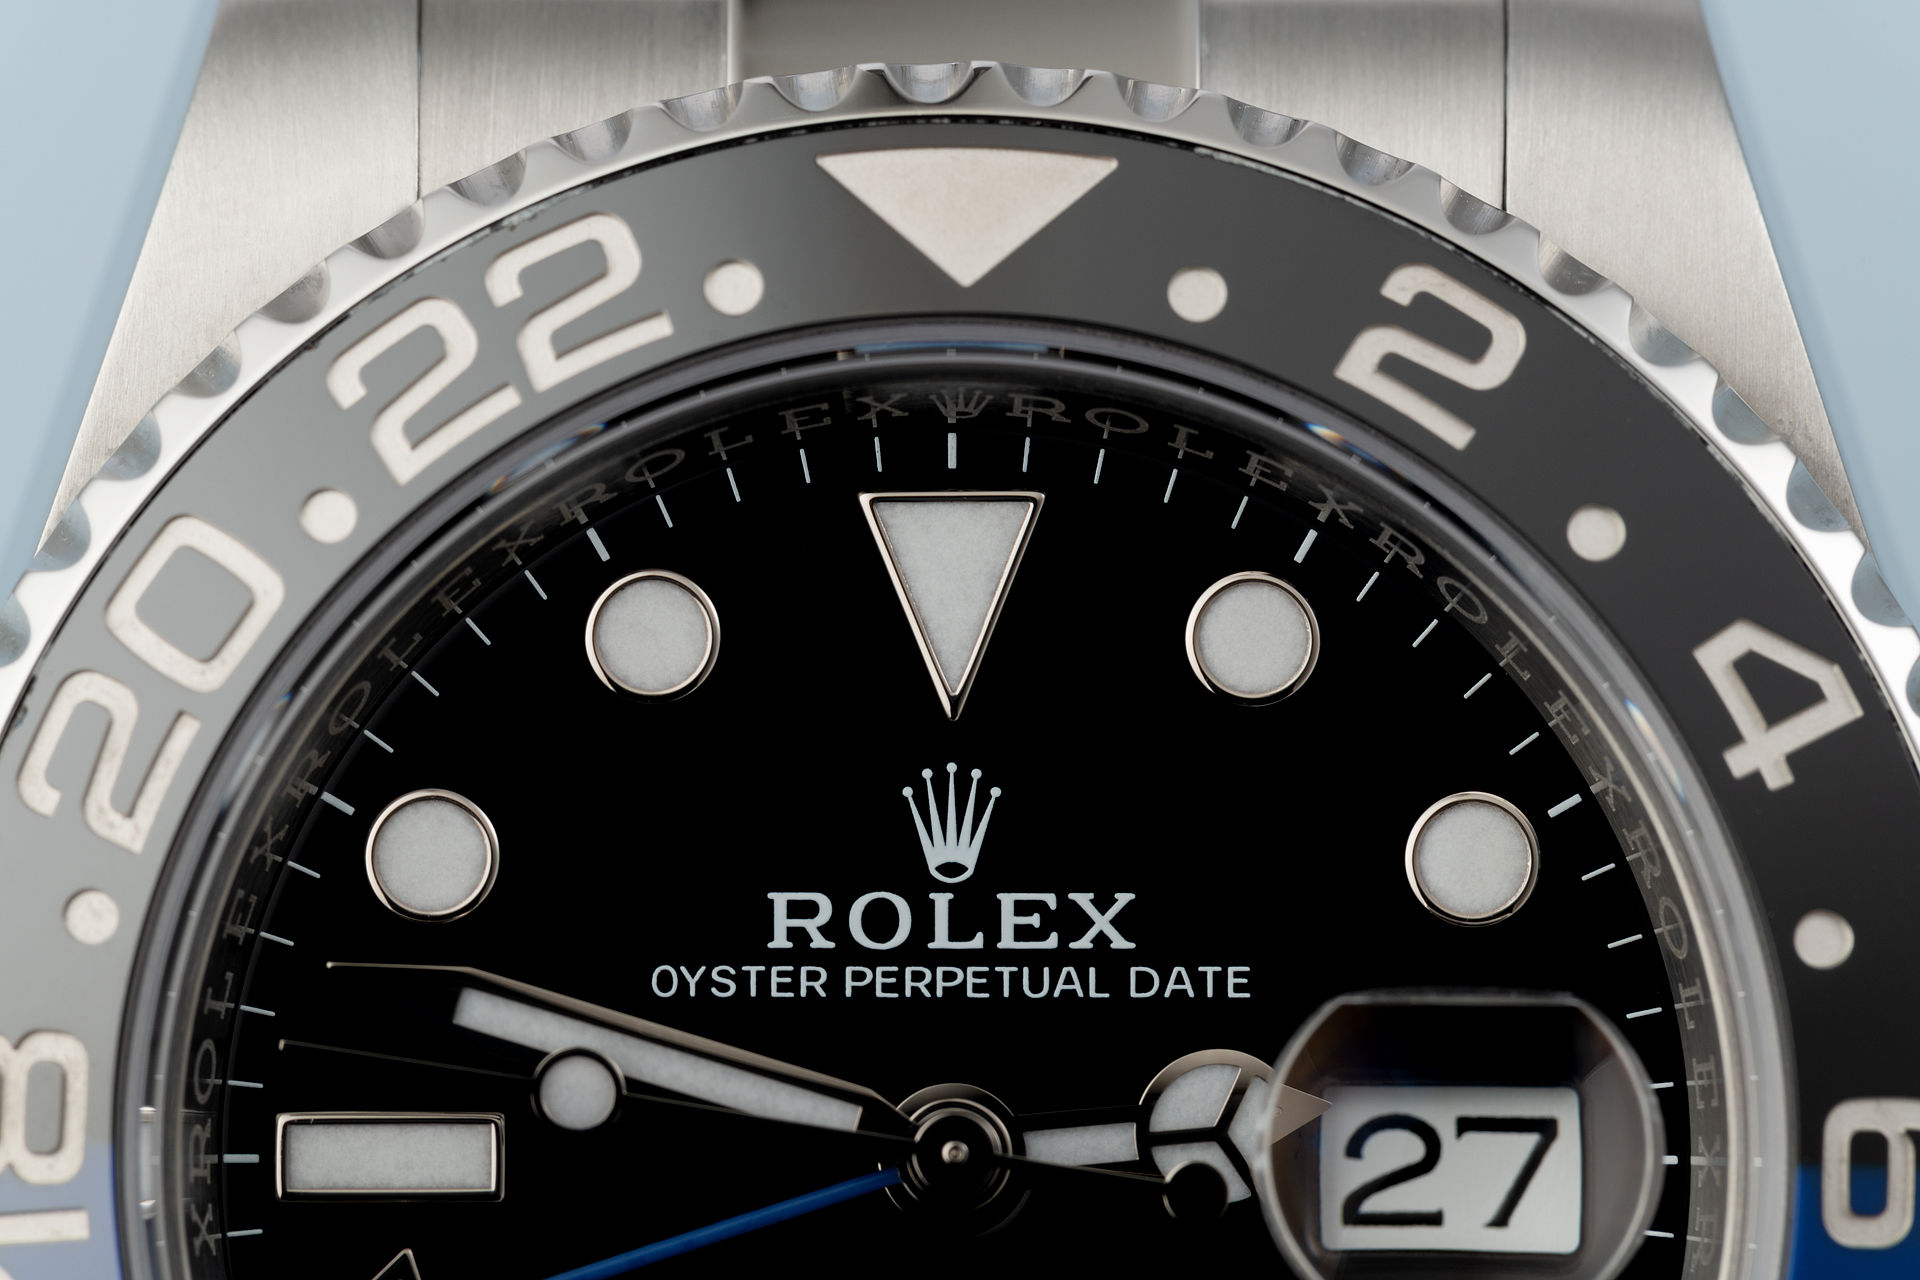 ref 116710BLNR | 5 Year Rolex Warranty  | Rolex GMT-Master II